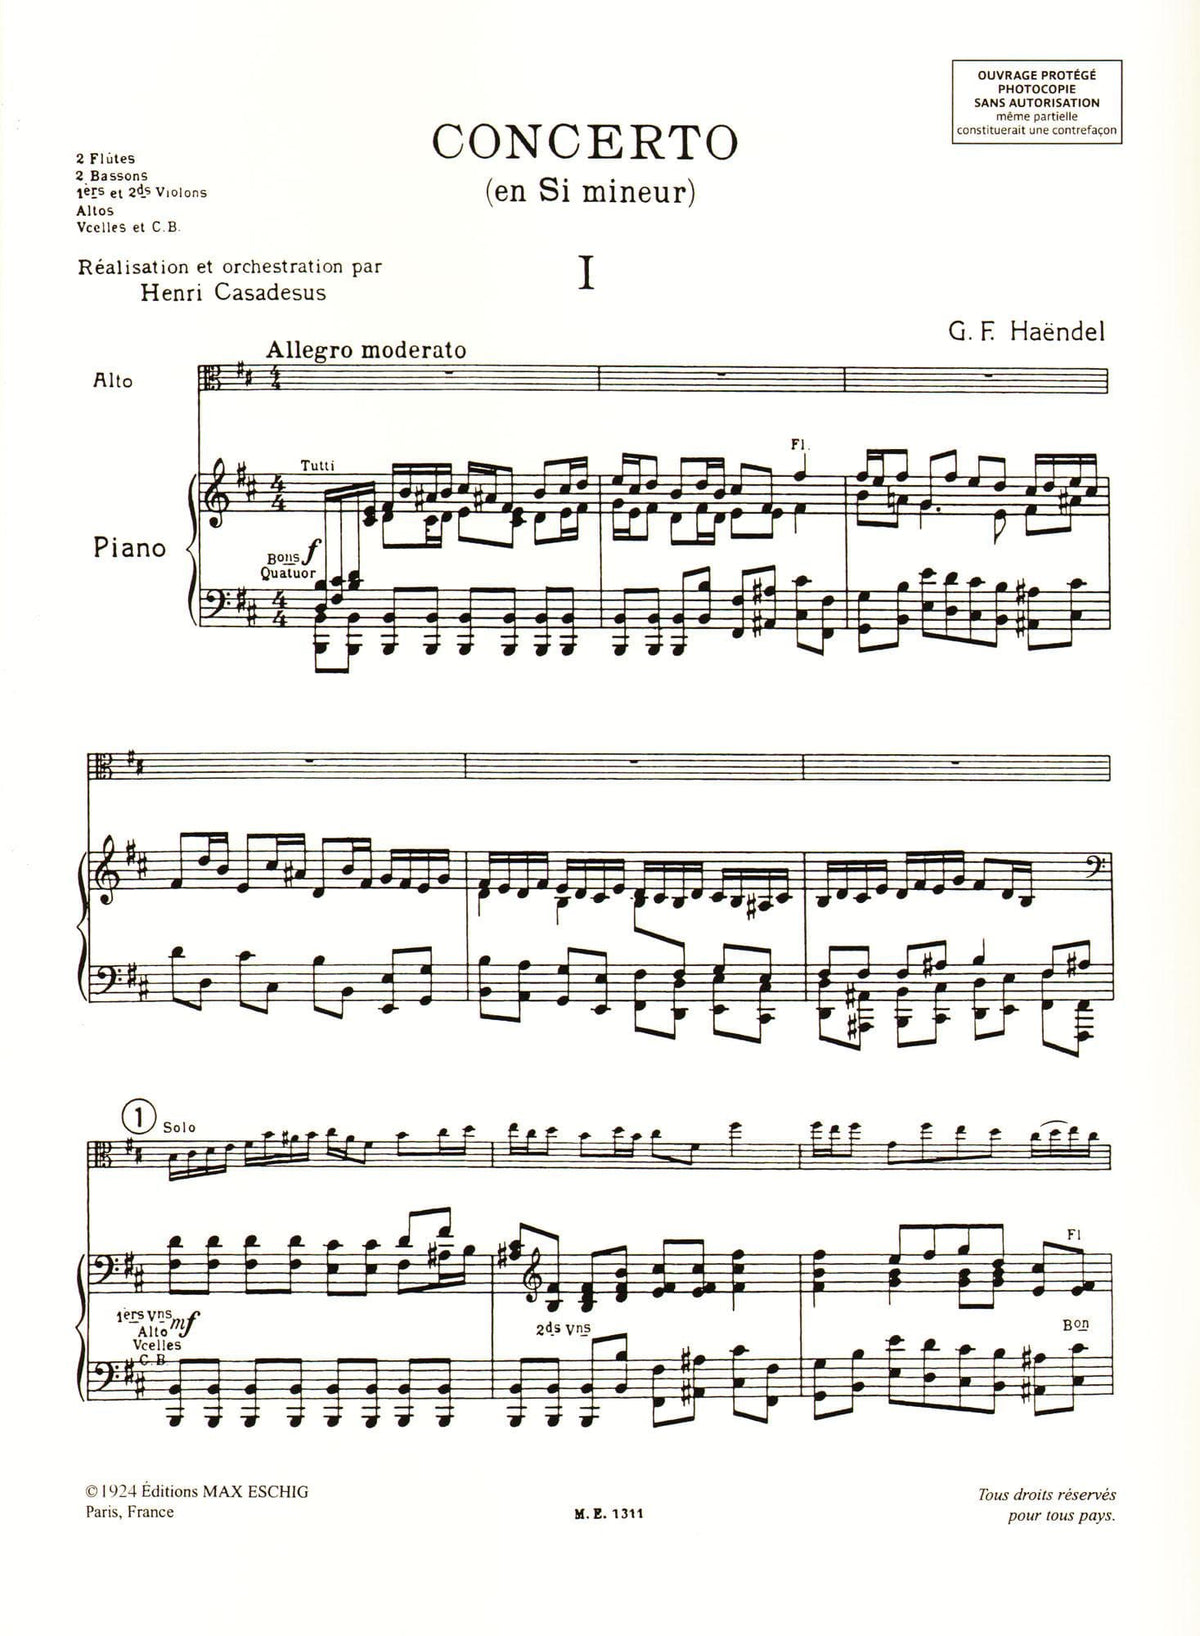 Handel, George Frideric - Concerto in B minor - Viola and Piano - edited by Henri Casadesus - Editions Durand